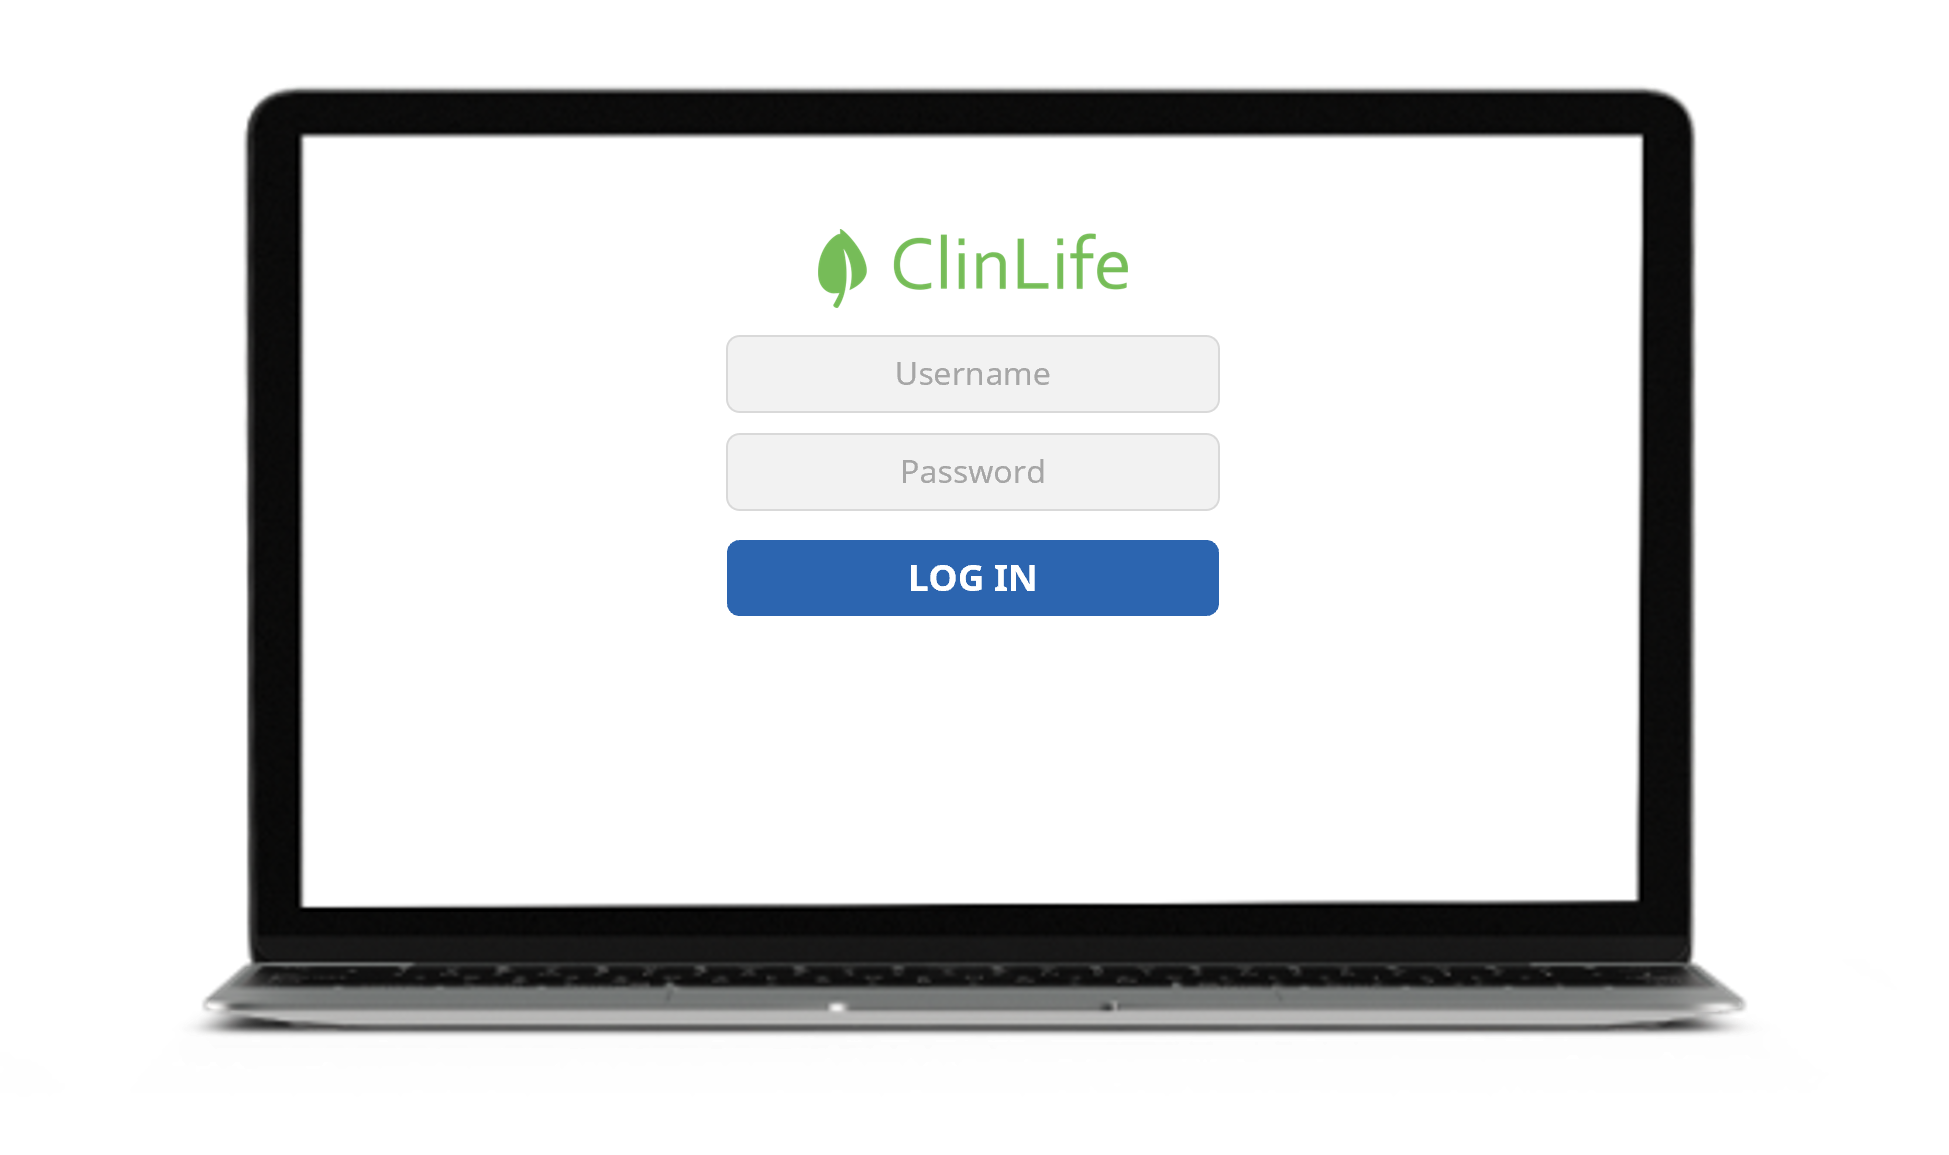 Laptop screen with ClinLife login interface